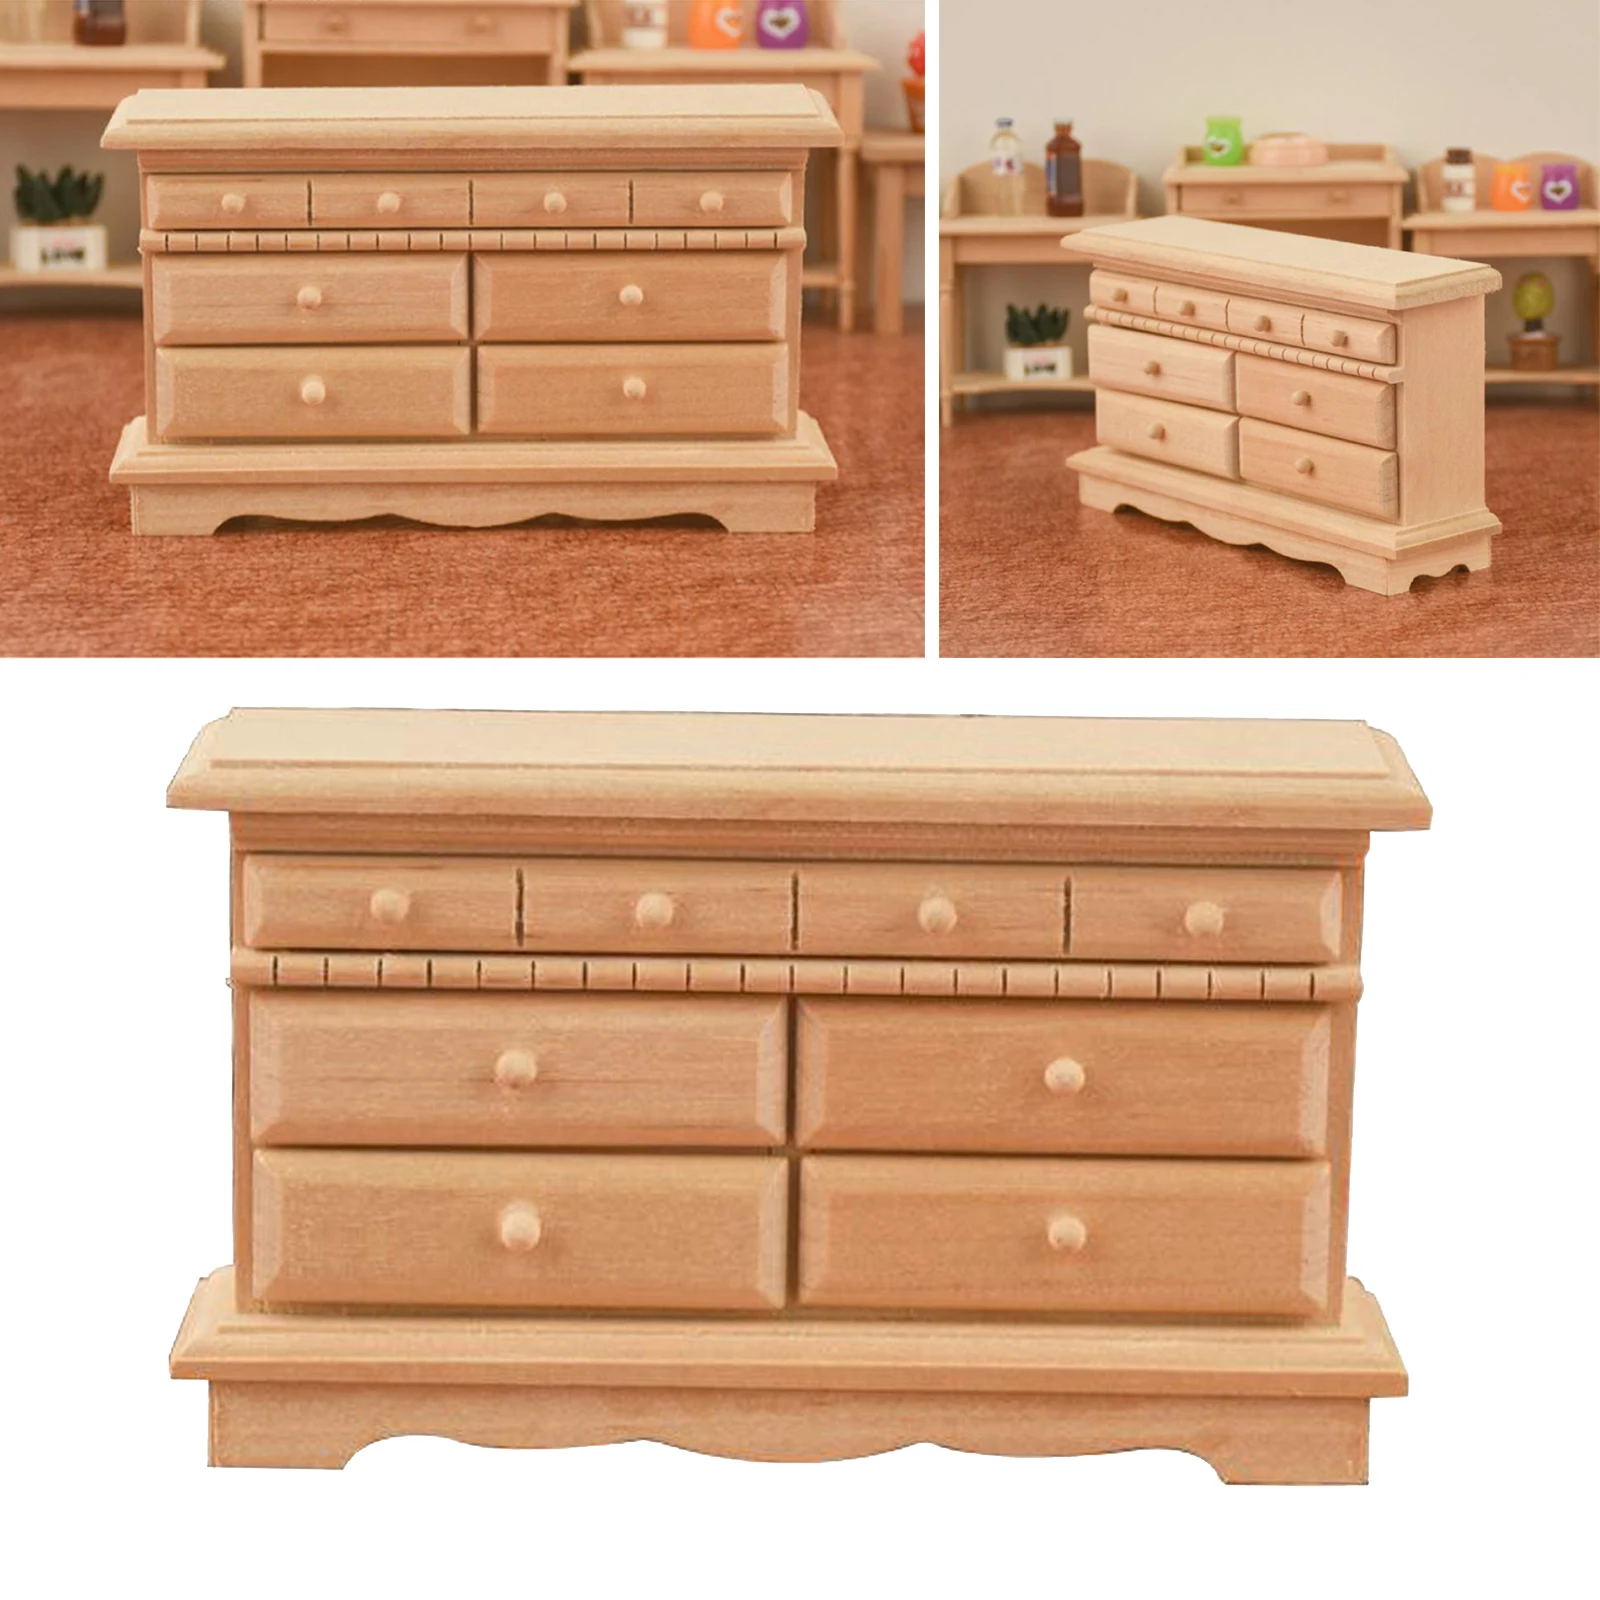 1/12 Miniature Wood Cabinet Simulation Living Room Furniture Scenery Accs